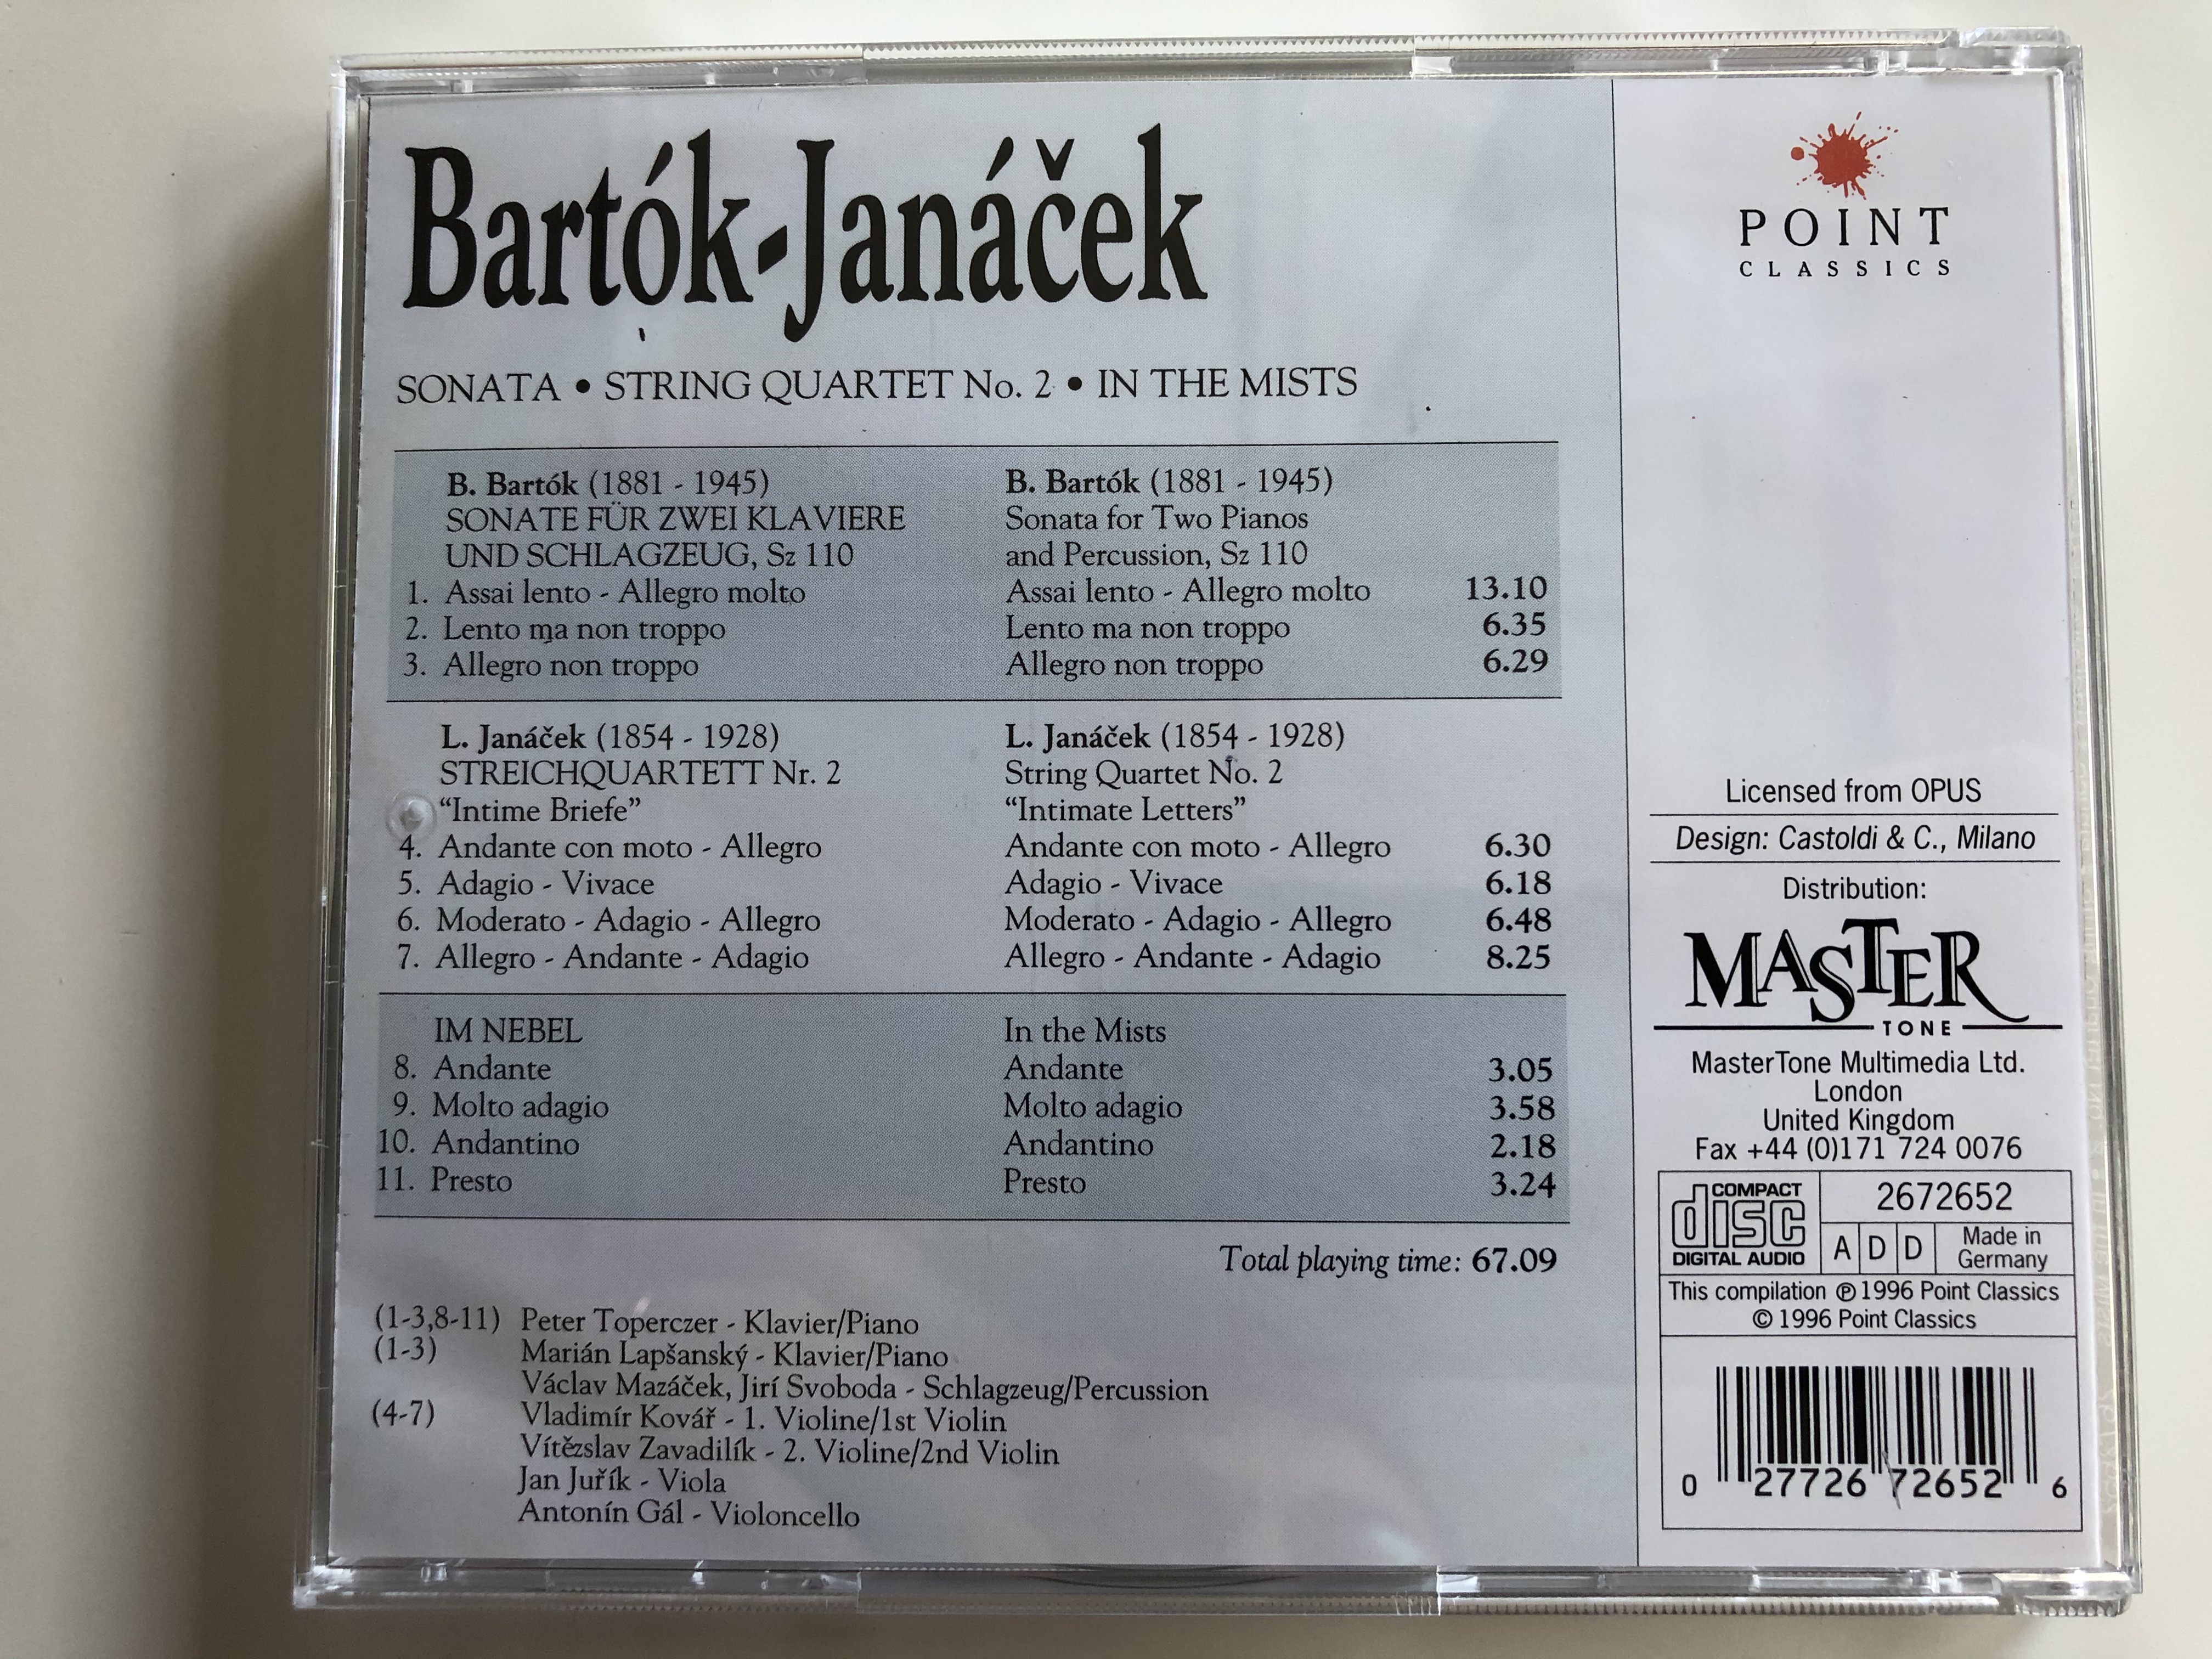 bartok-jana-ek-sonata-string-quartet-no.-2-in-the-mists-point-classics-audio-cd-1996-2672652-5-.jpg